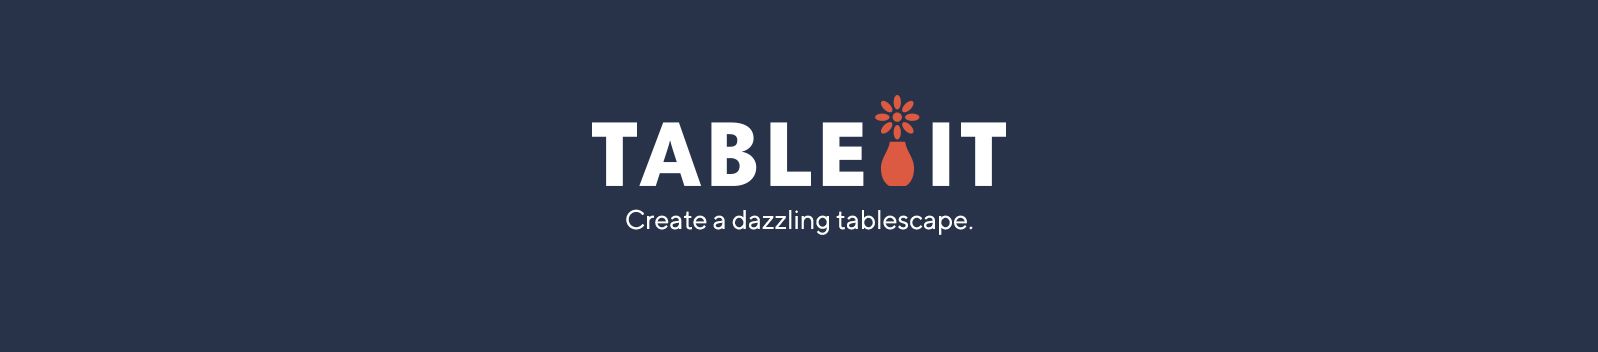 Table It!  Create a dazzling tablescape.